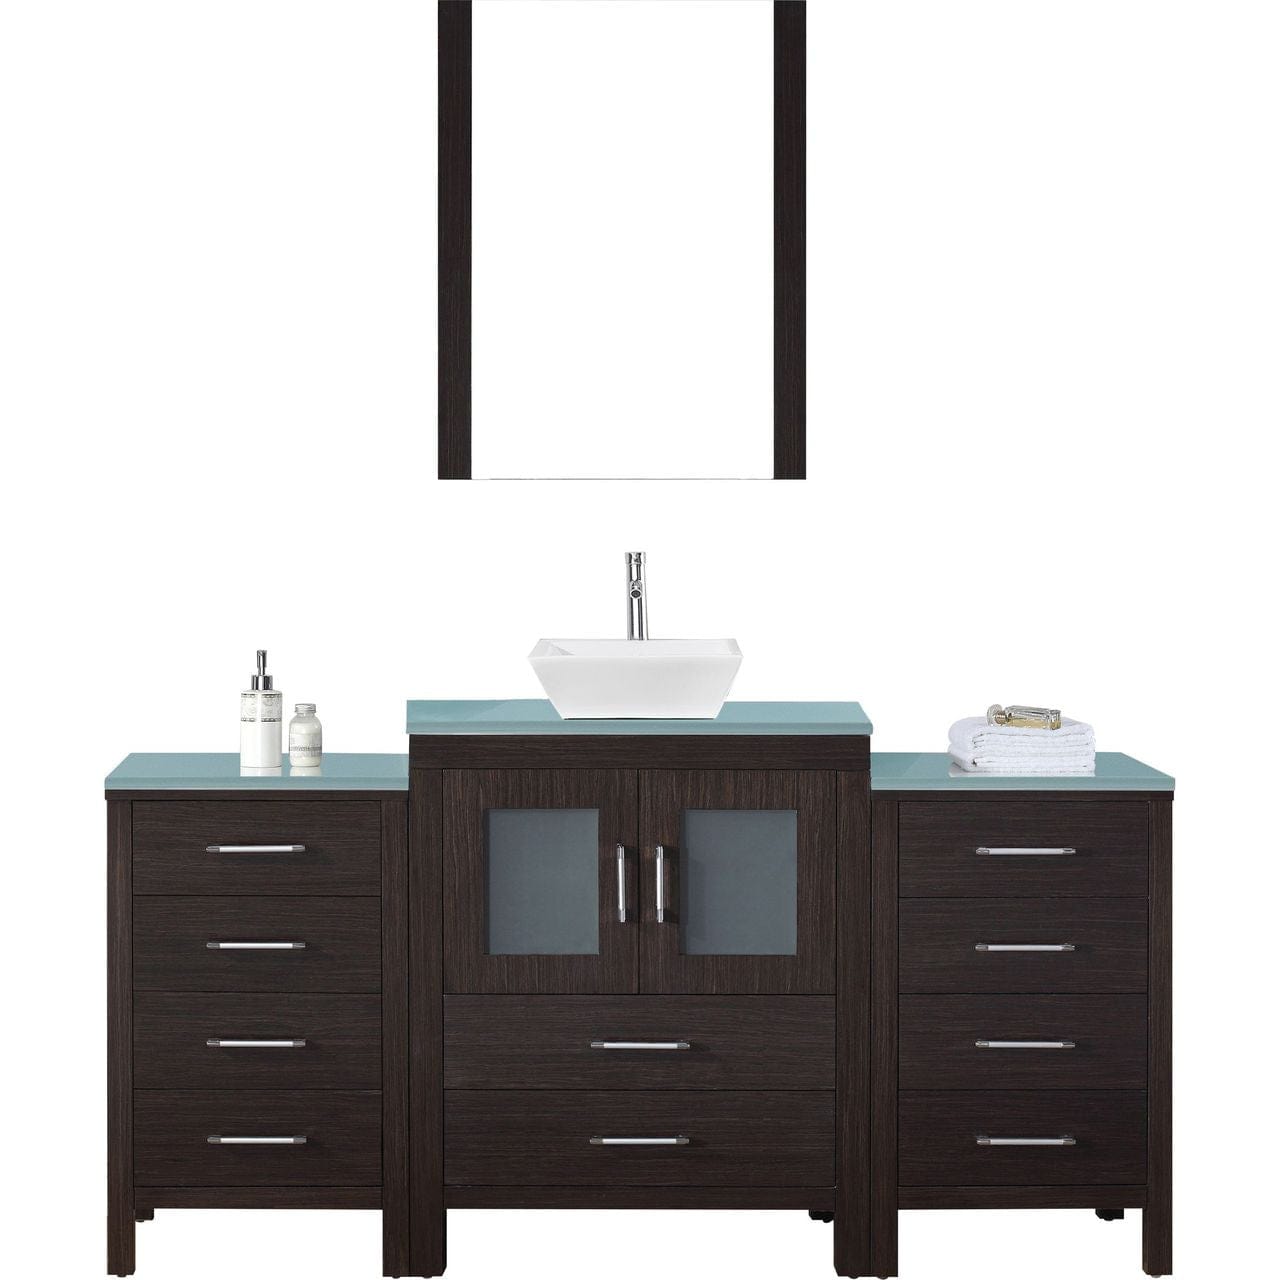 Virtu USA Dior 64 Single Bathroom Vanity Set in Espresso w/ Tempered Glass Counter-Top | Vessel Sink